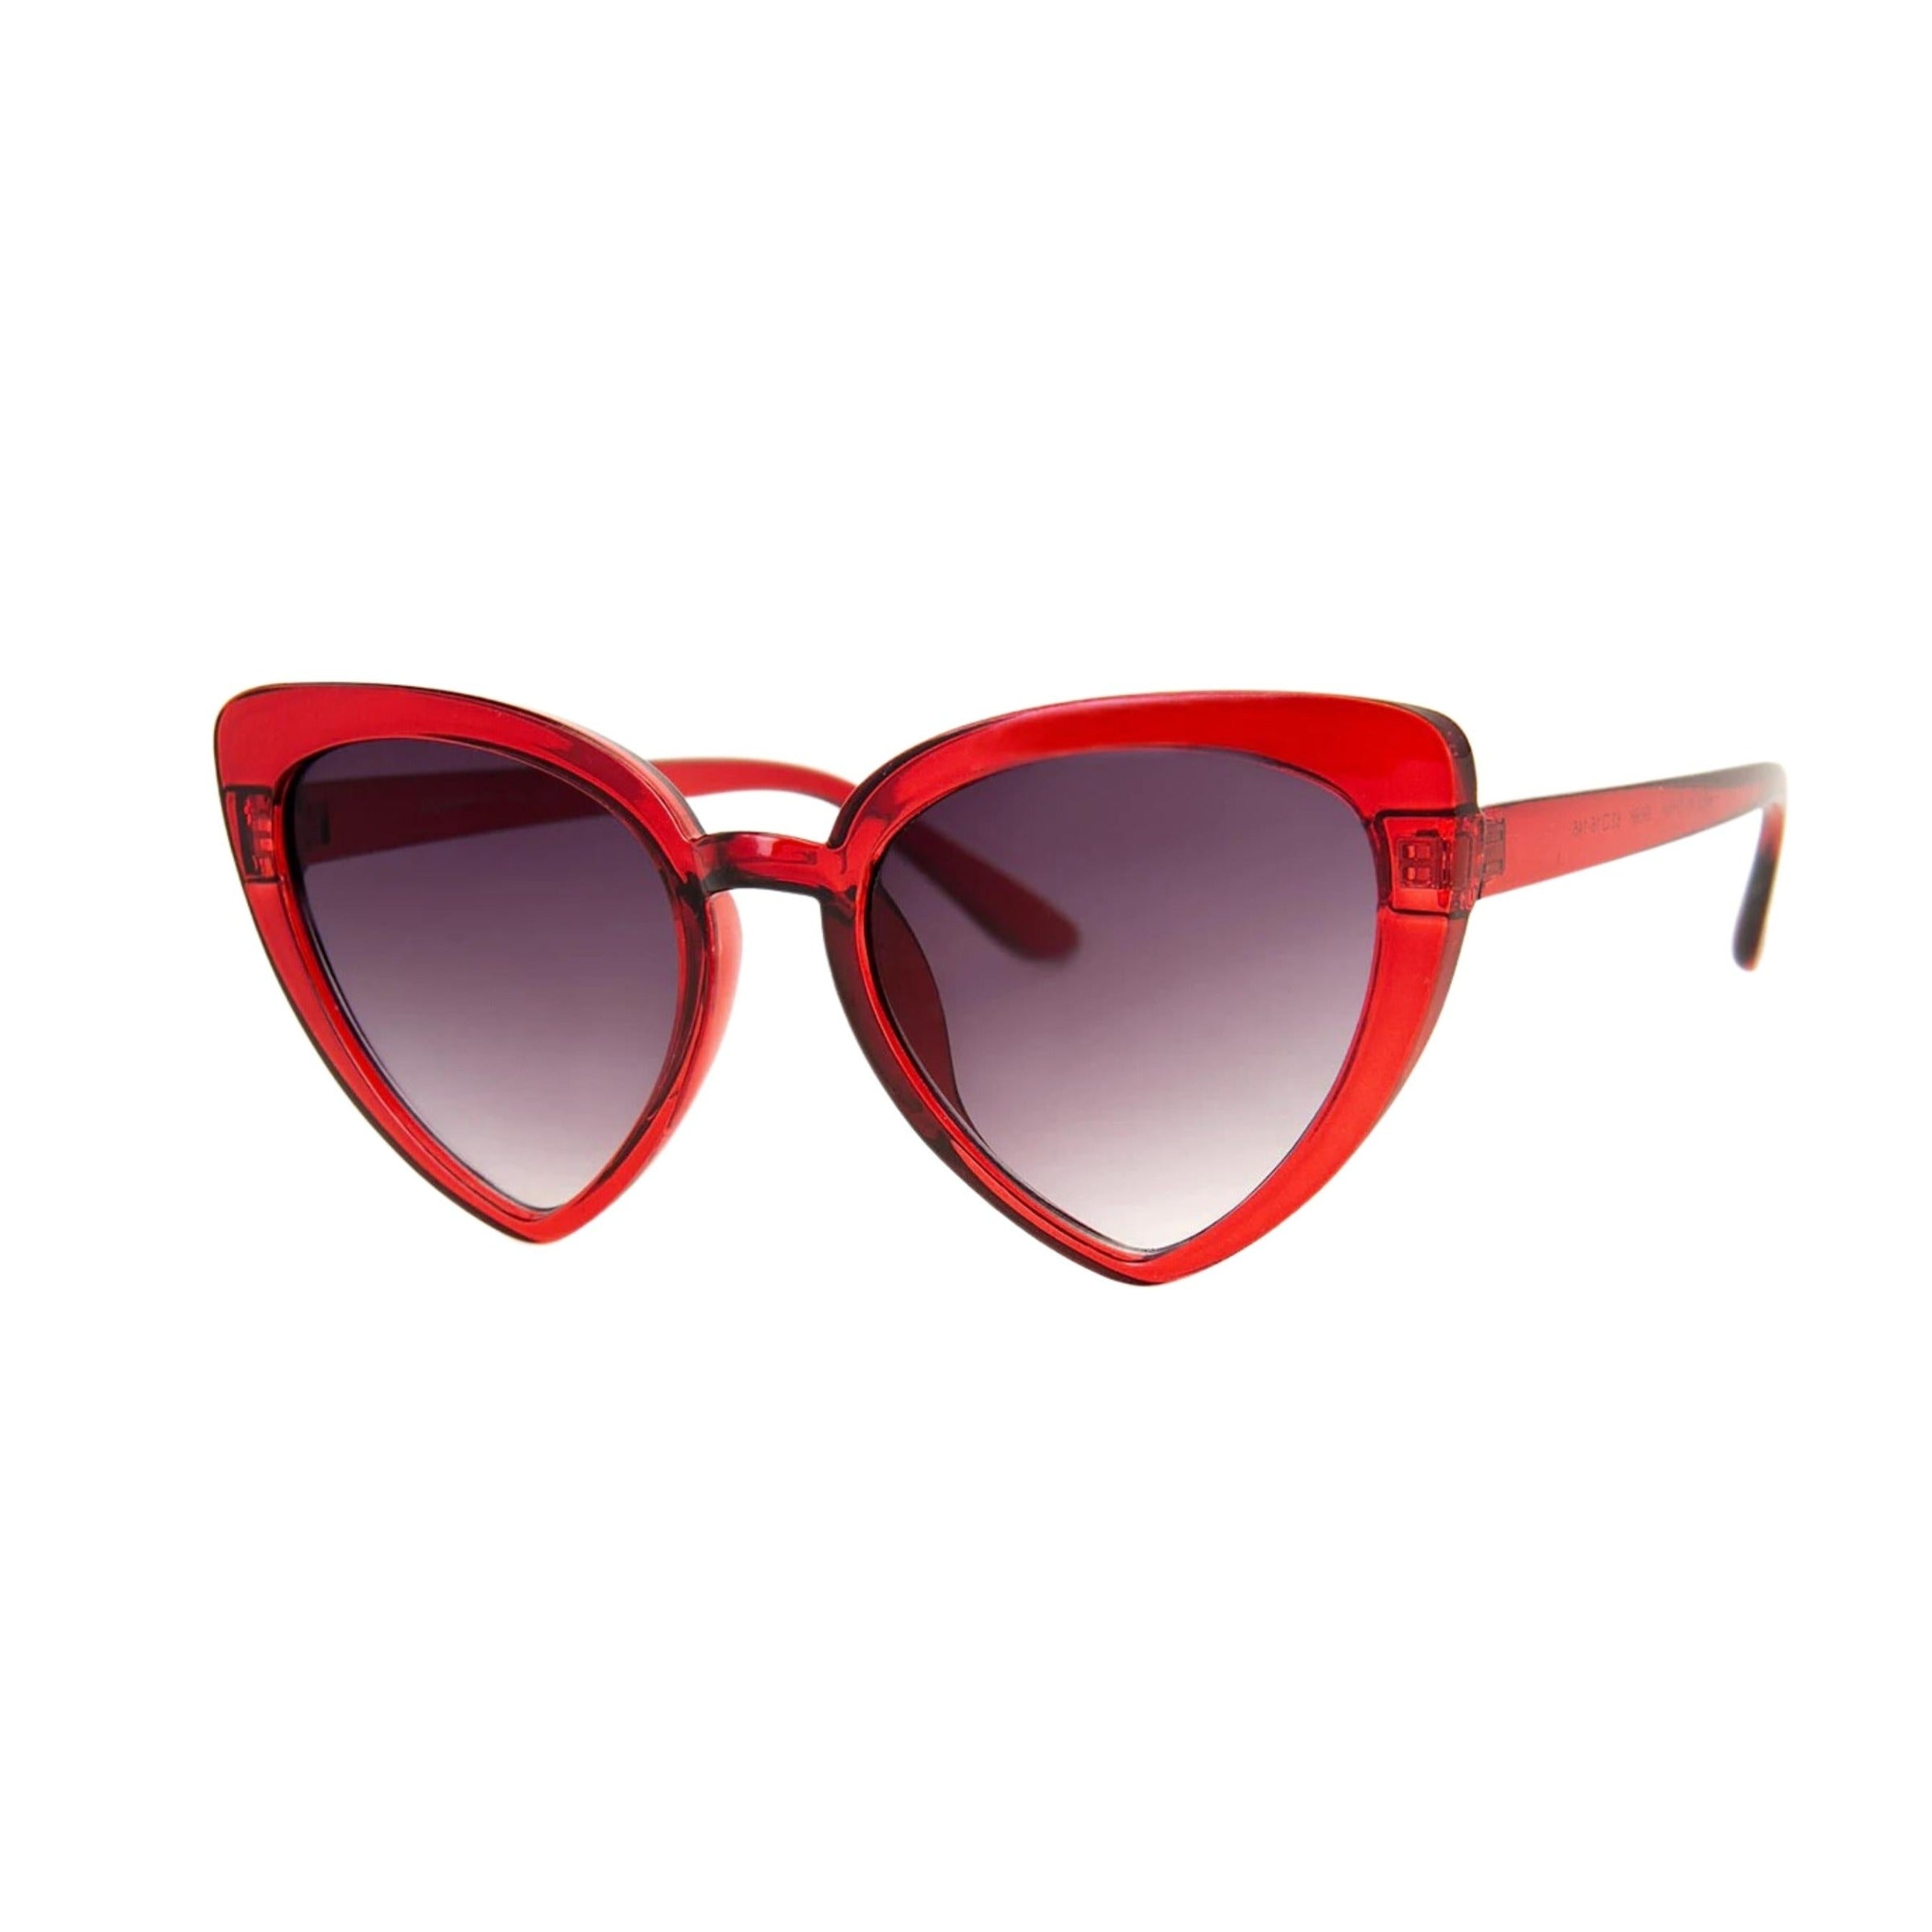 Red Rum Sunglasses Besom Boutique